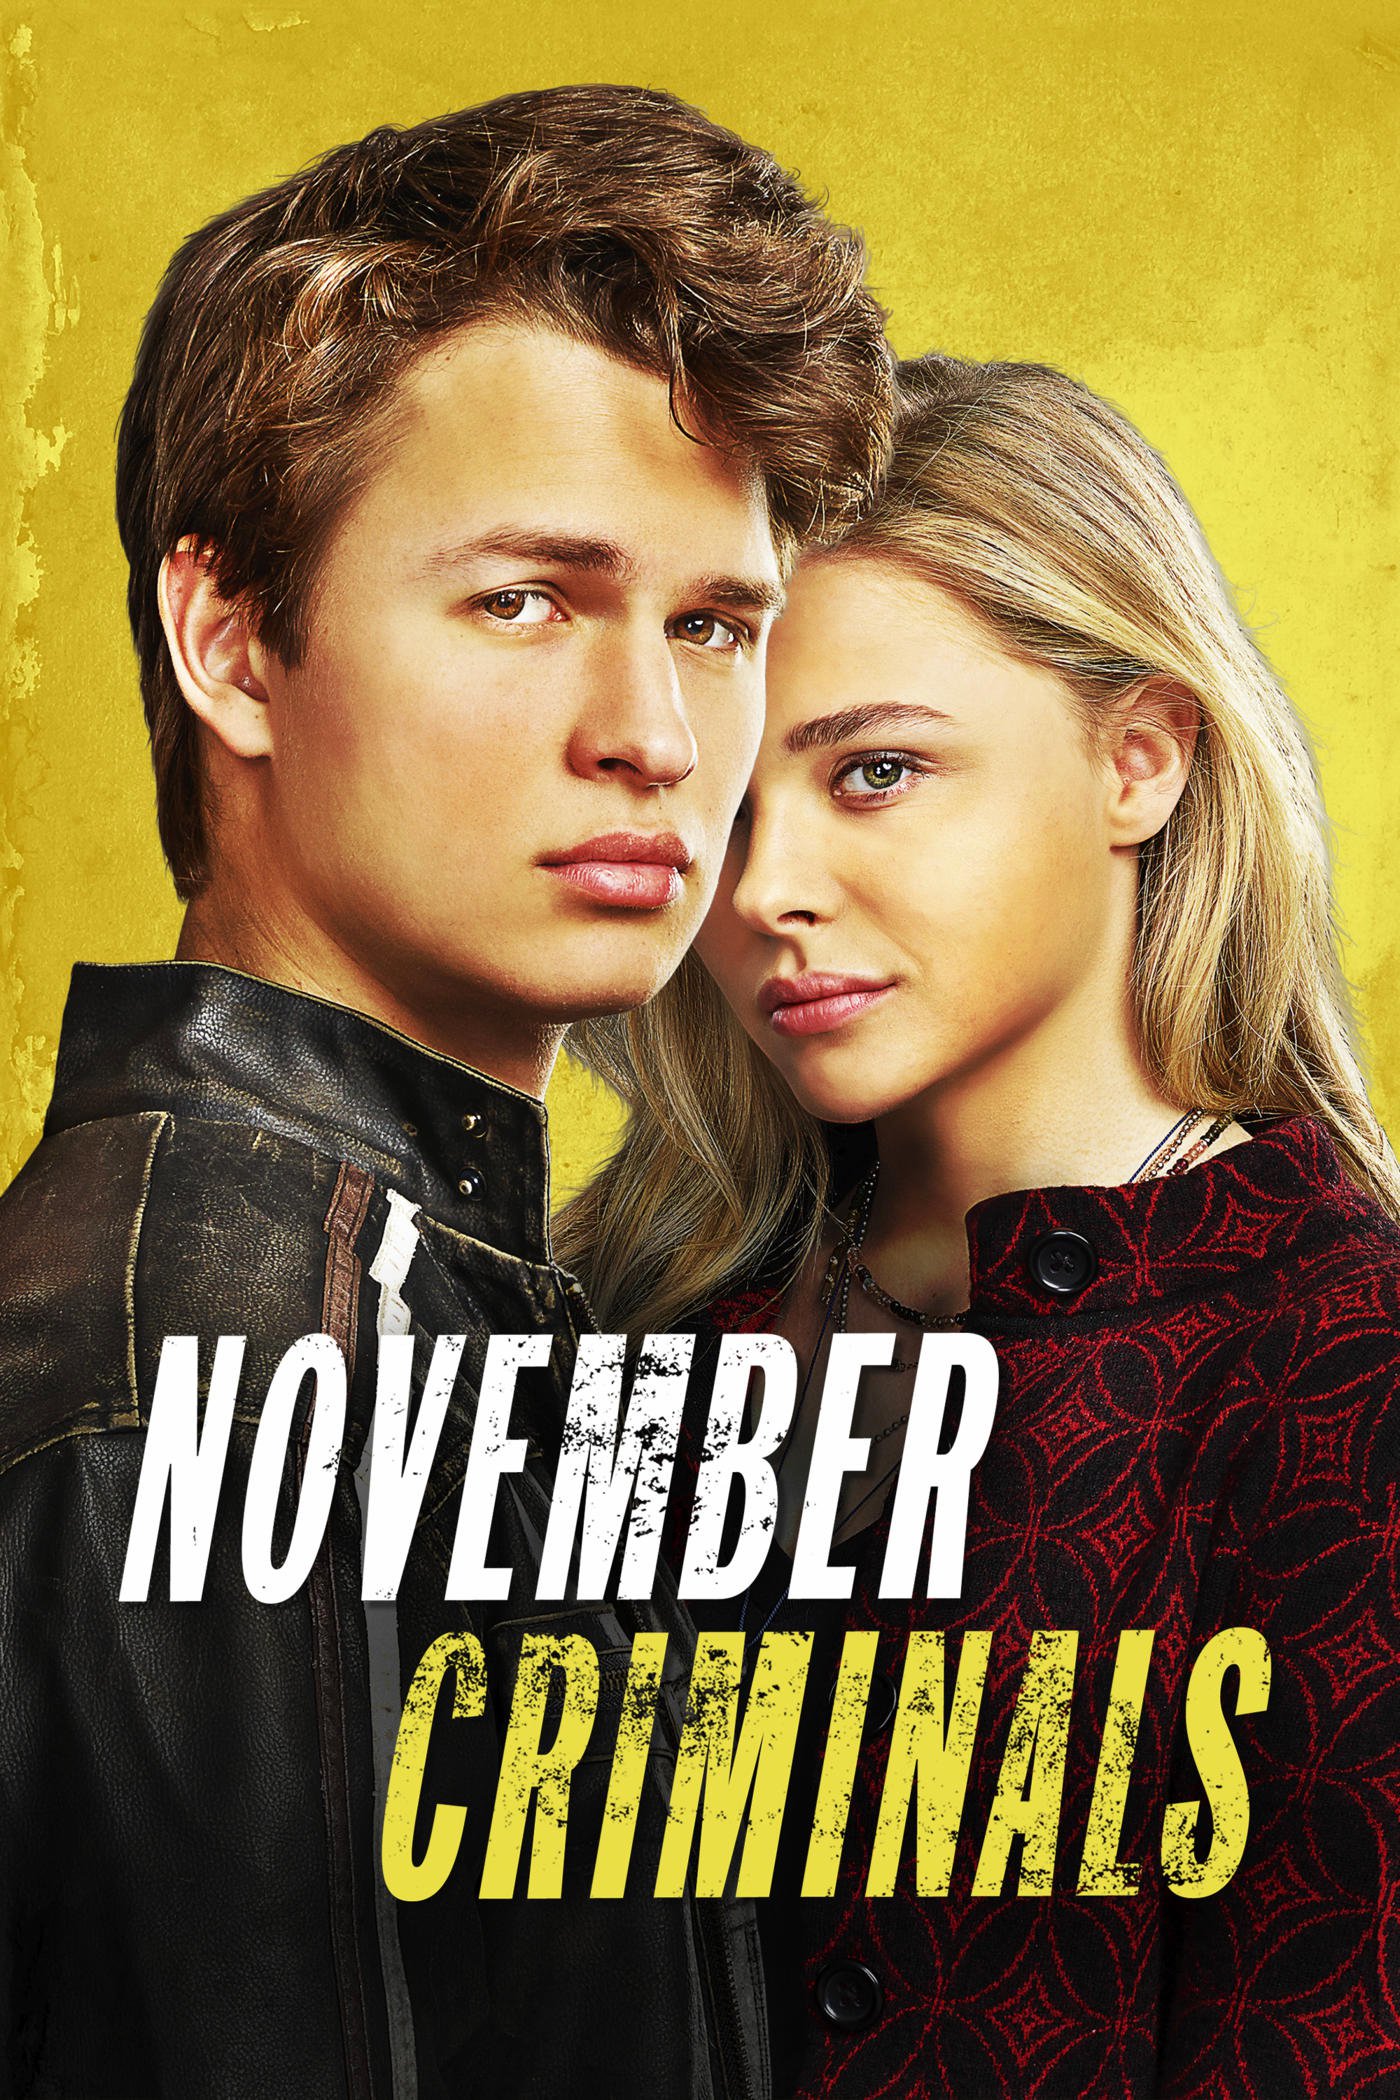 Poster for the movie "November Criminals"